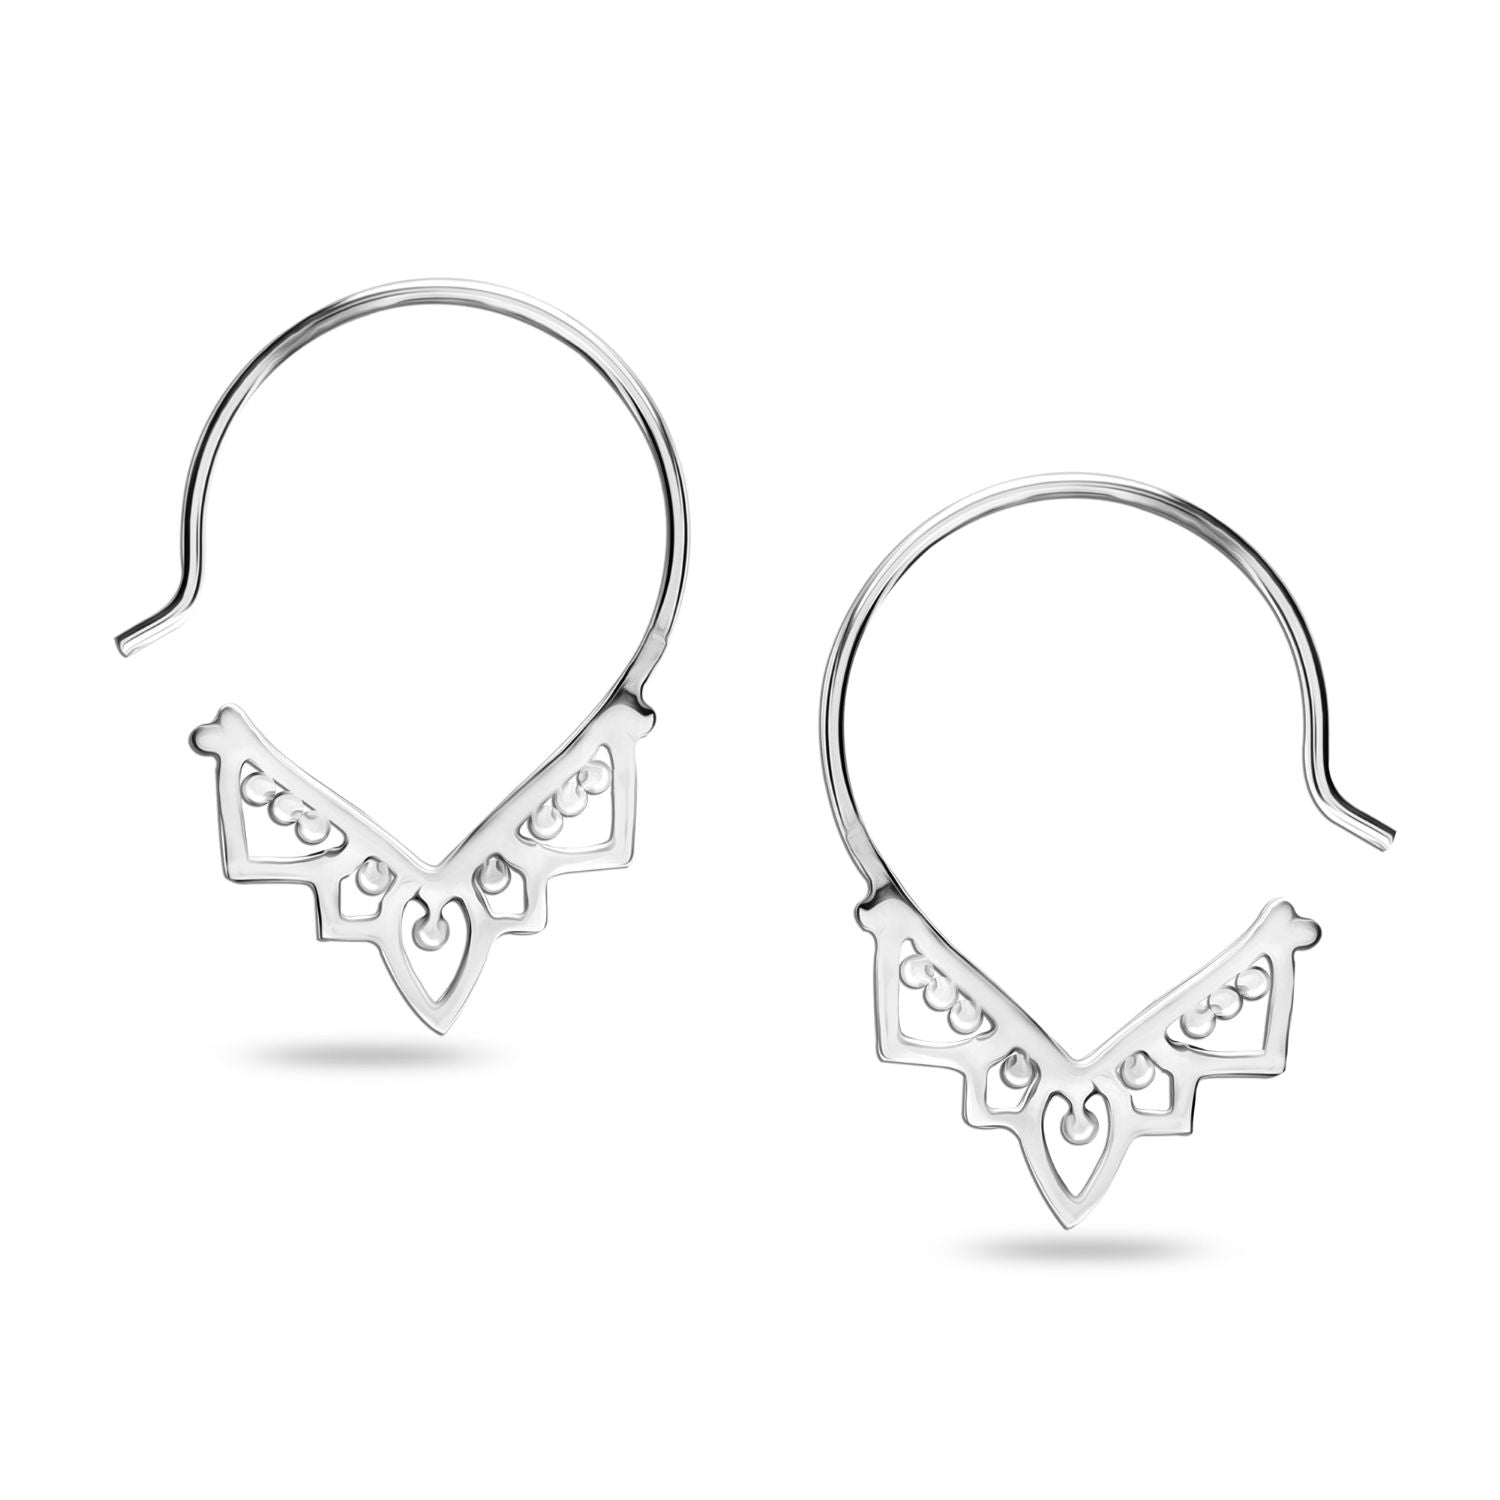 925 Sterling Silver Jewellery Antique Balinese Tribal Hoop Earrings for Women Girl